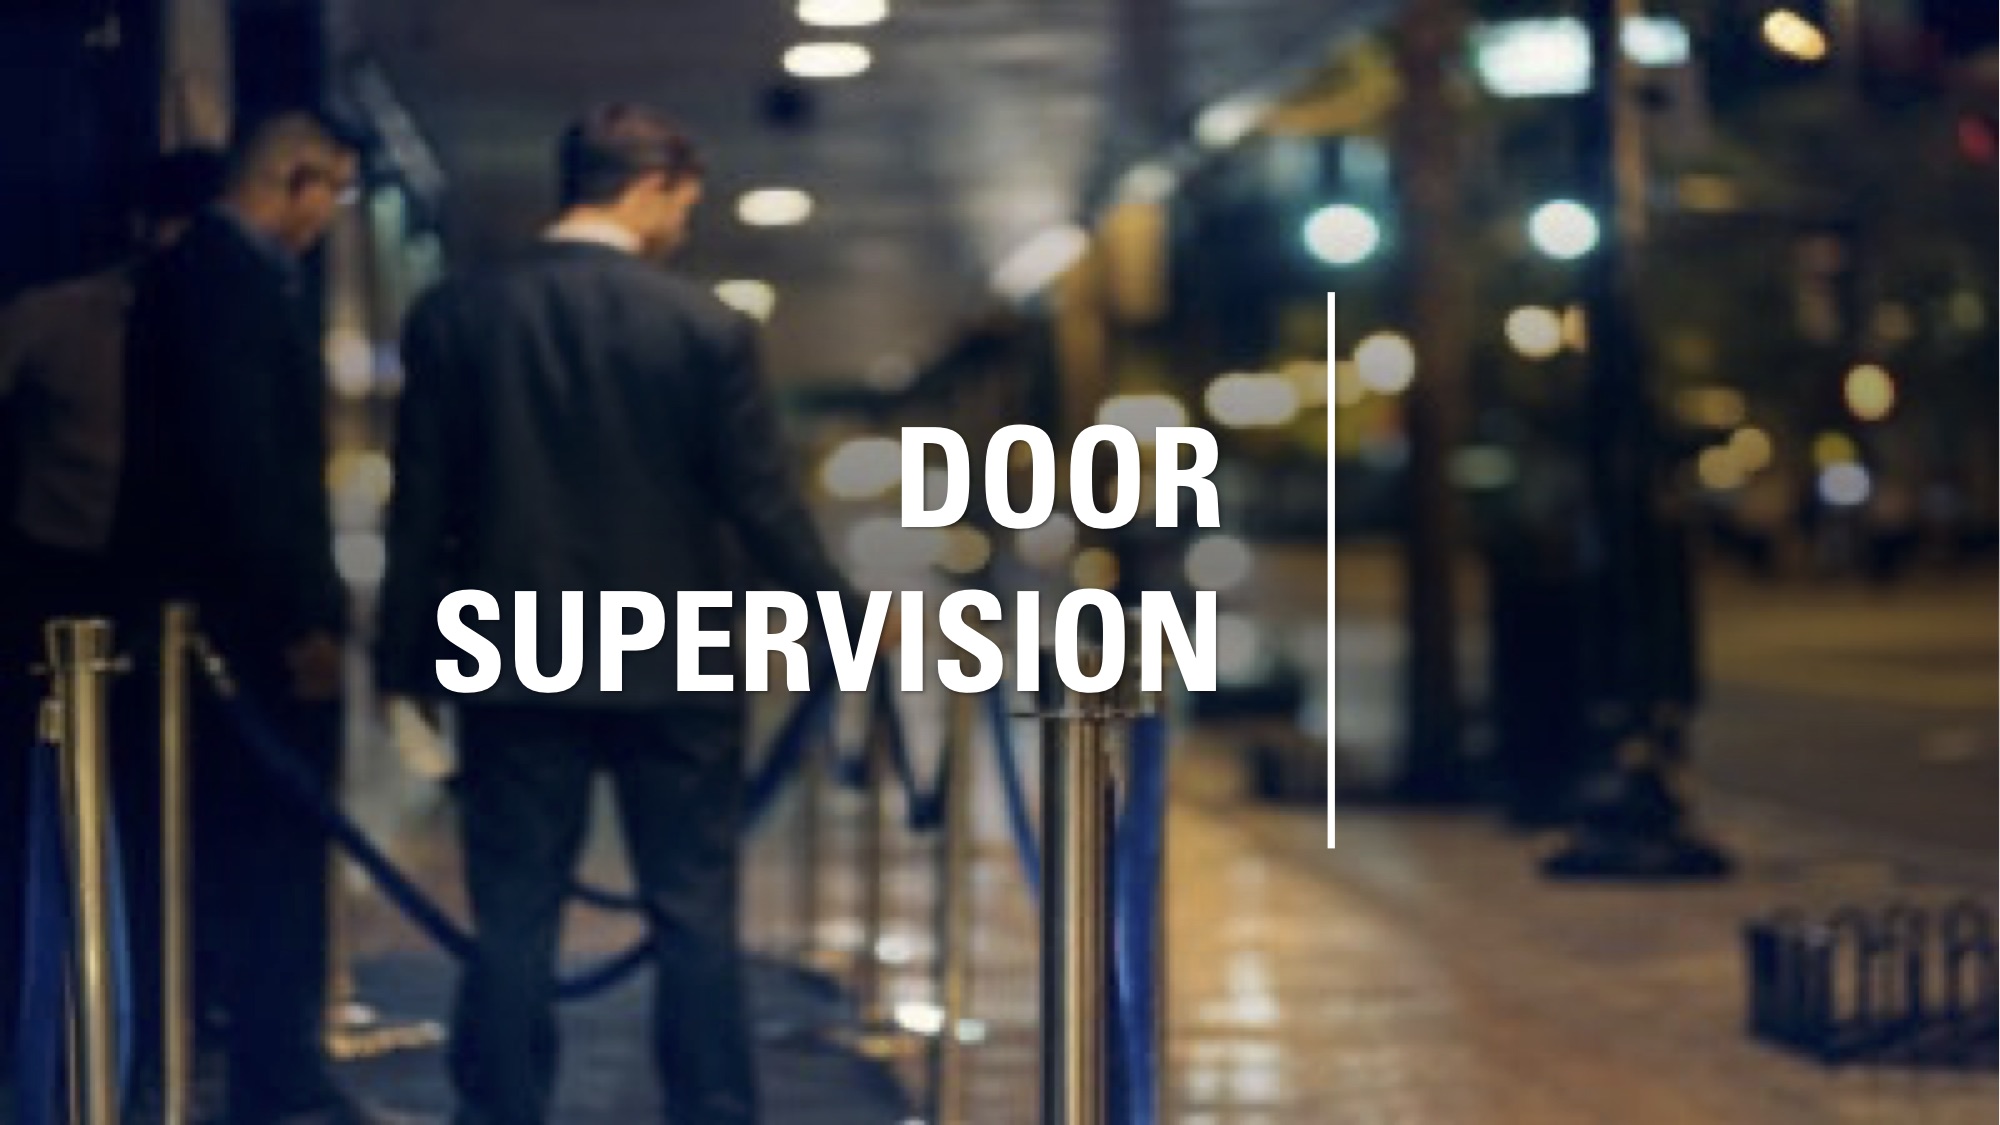 Door Supervision Services